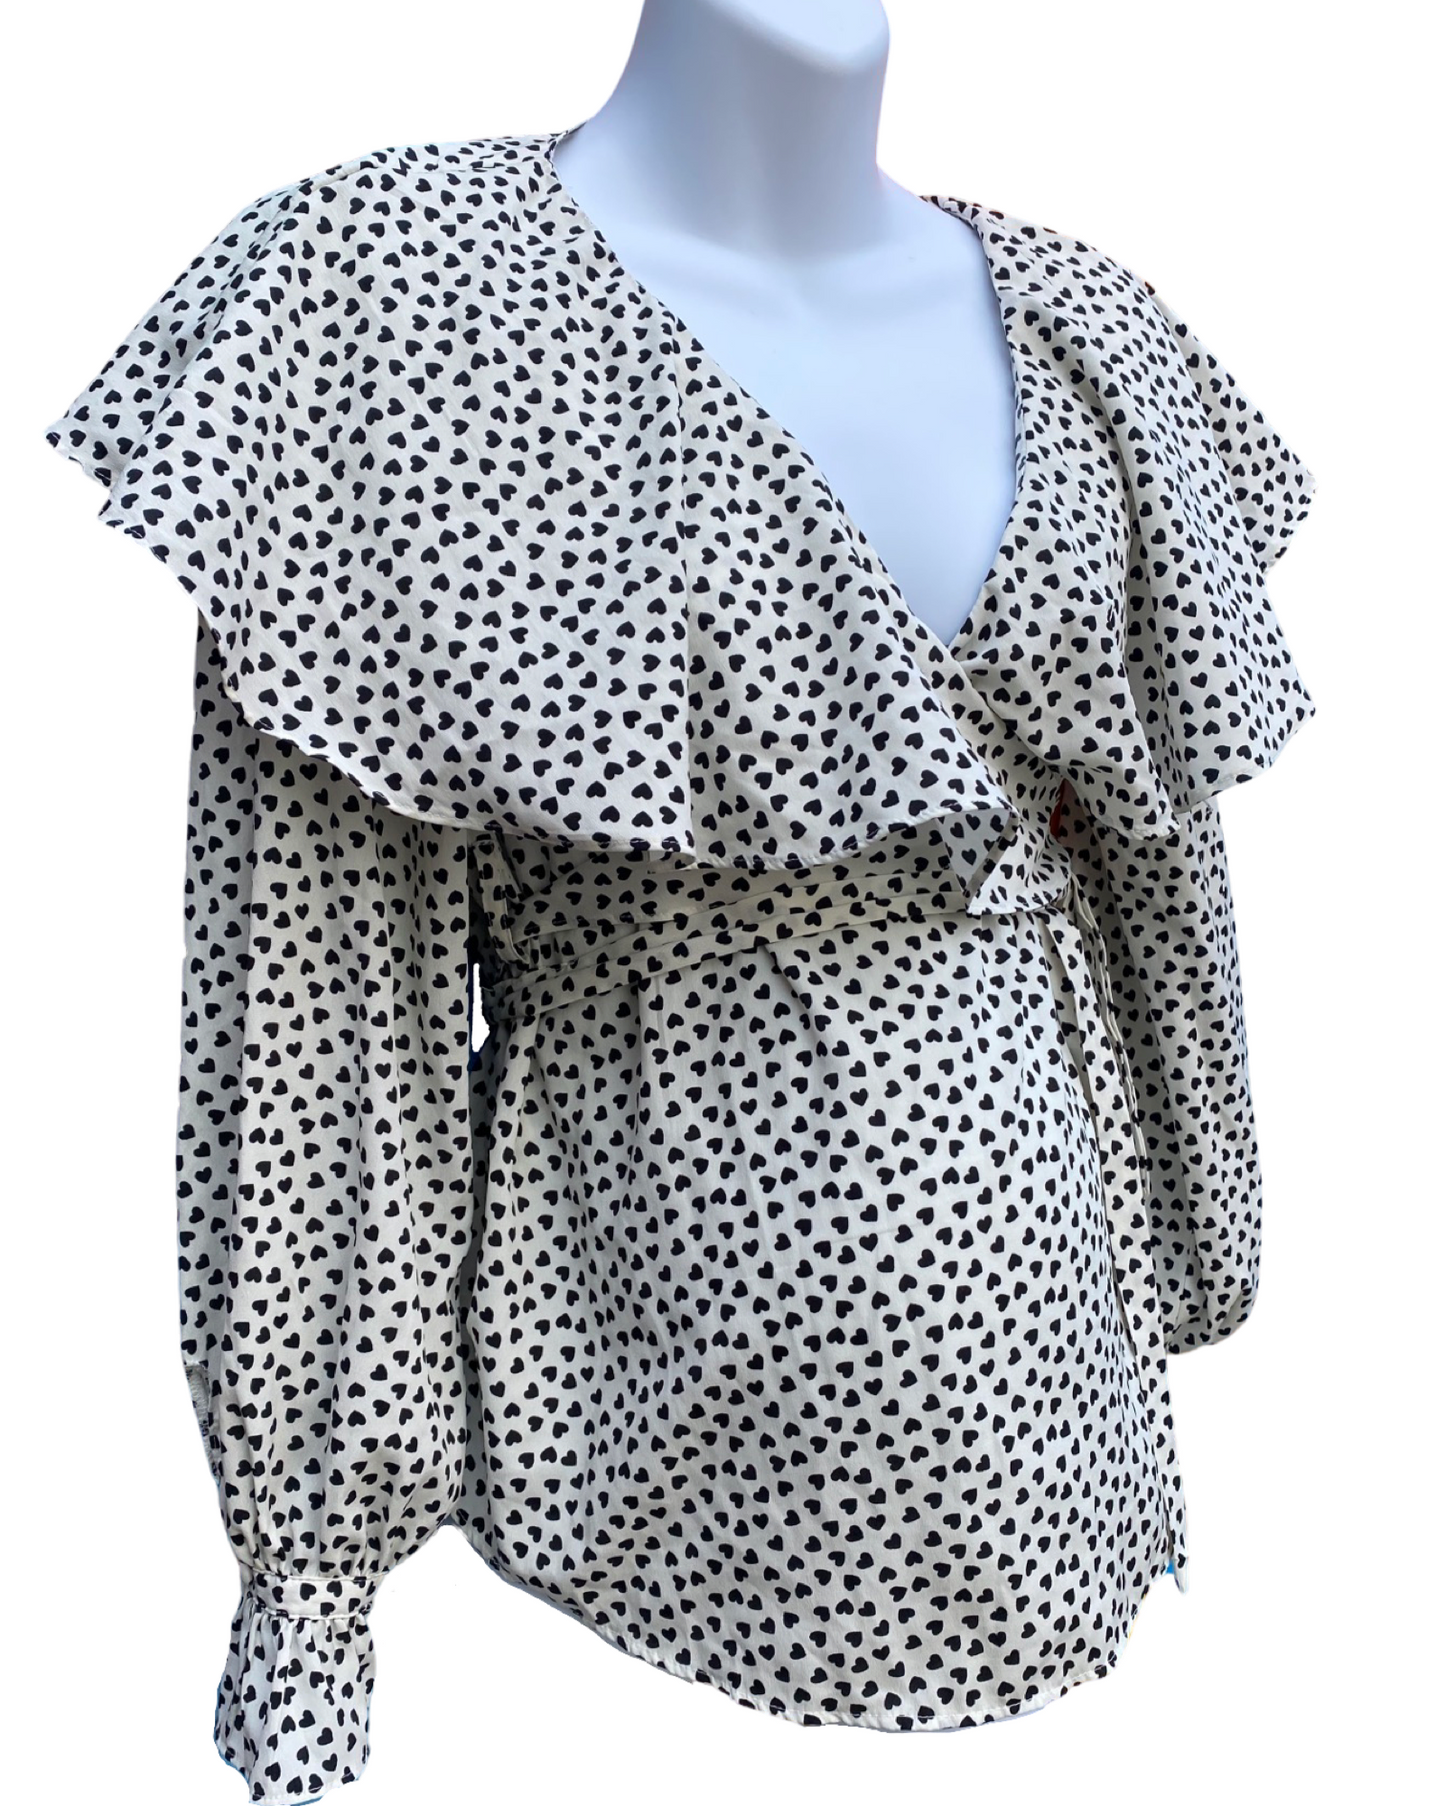 Topshop maternity heart print blouse (size 8)